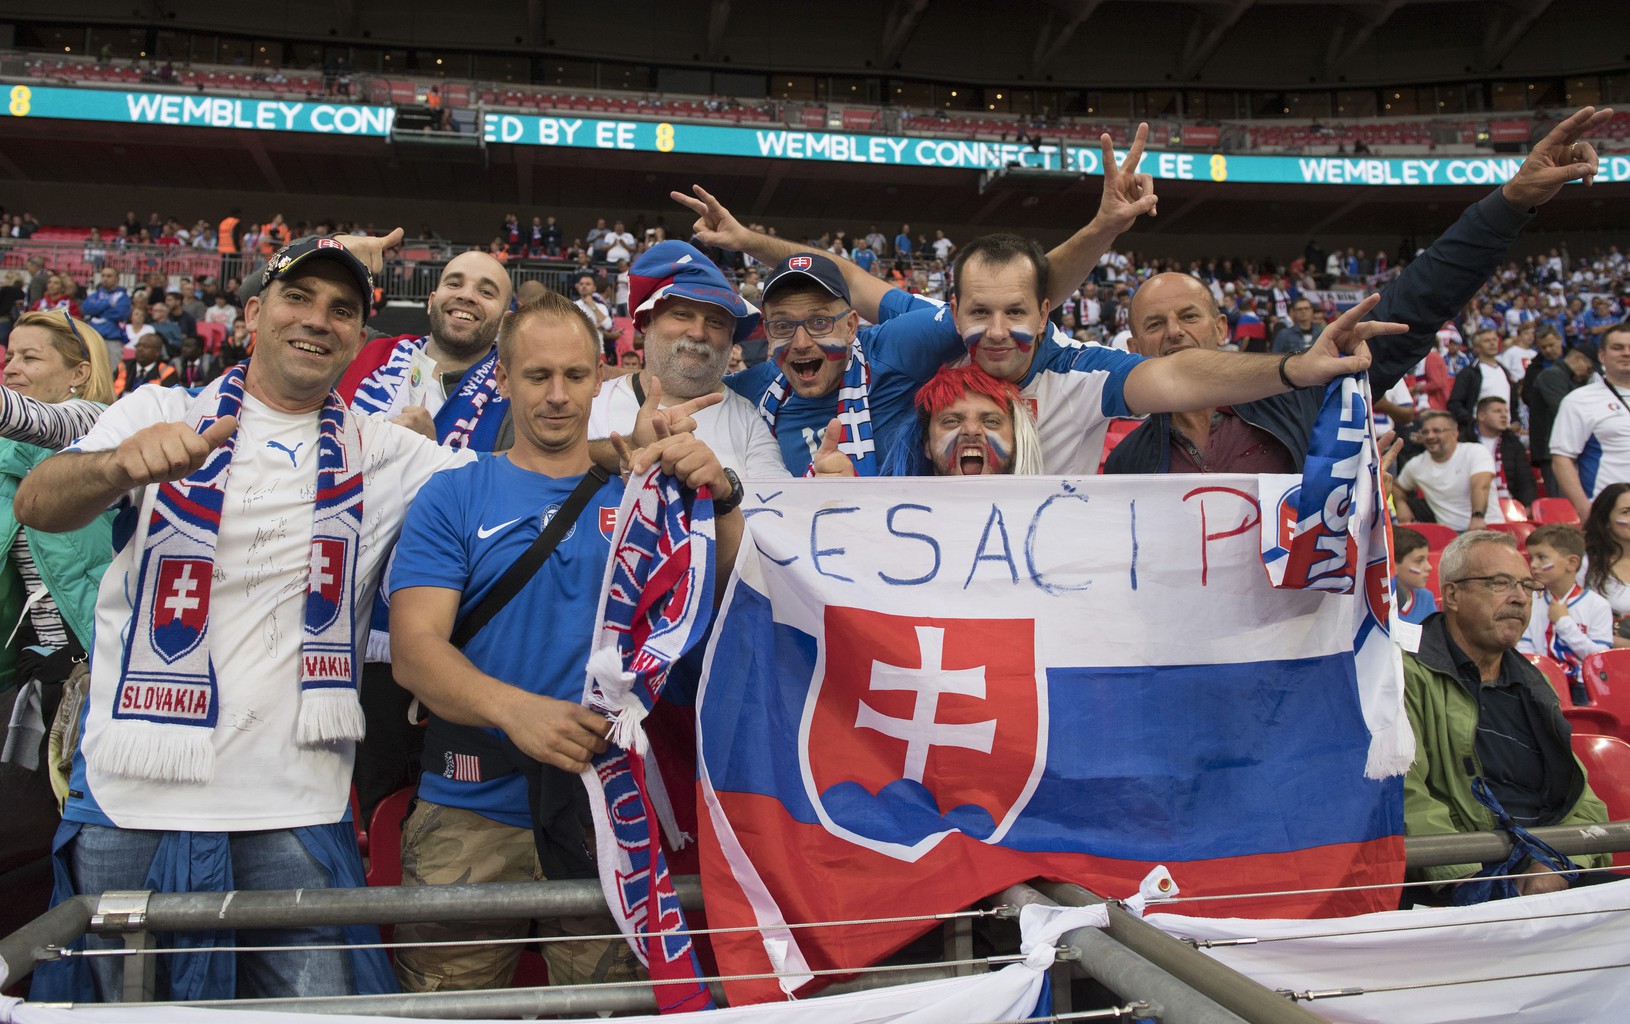 Slovenskí fanúšikovia na Wembley